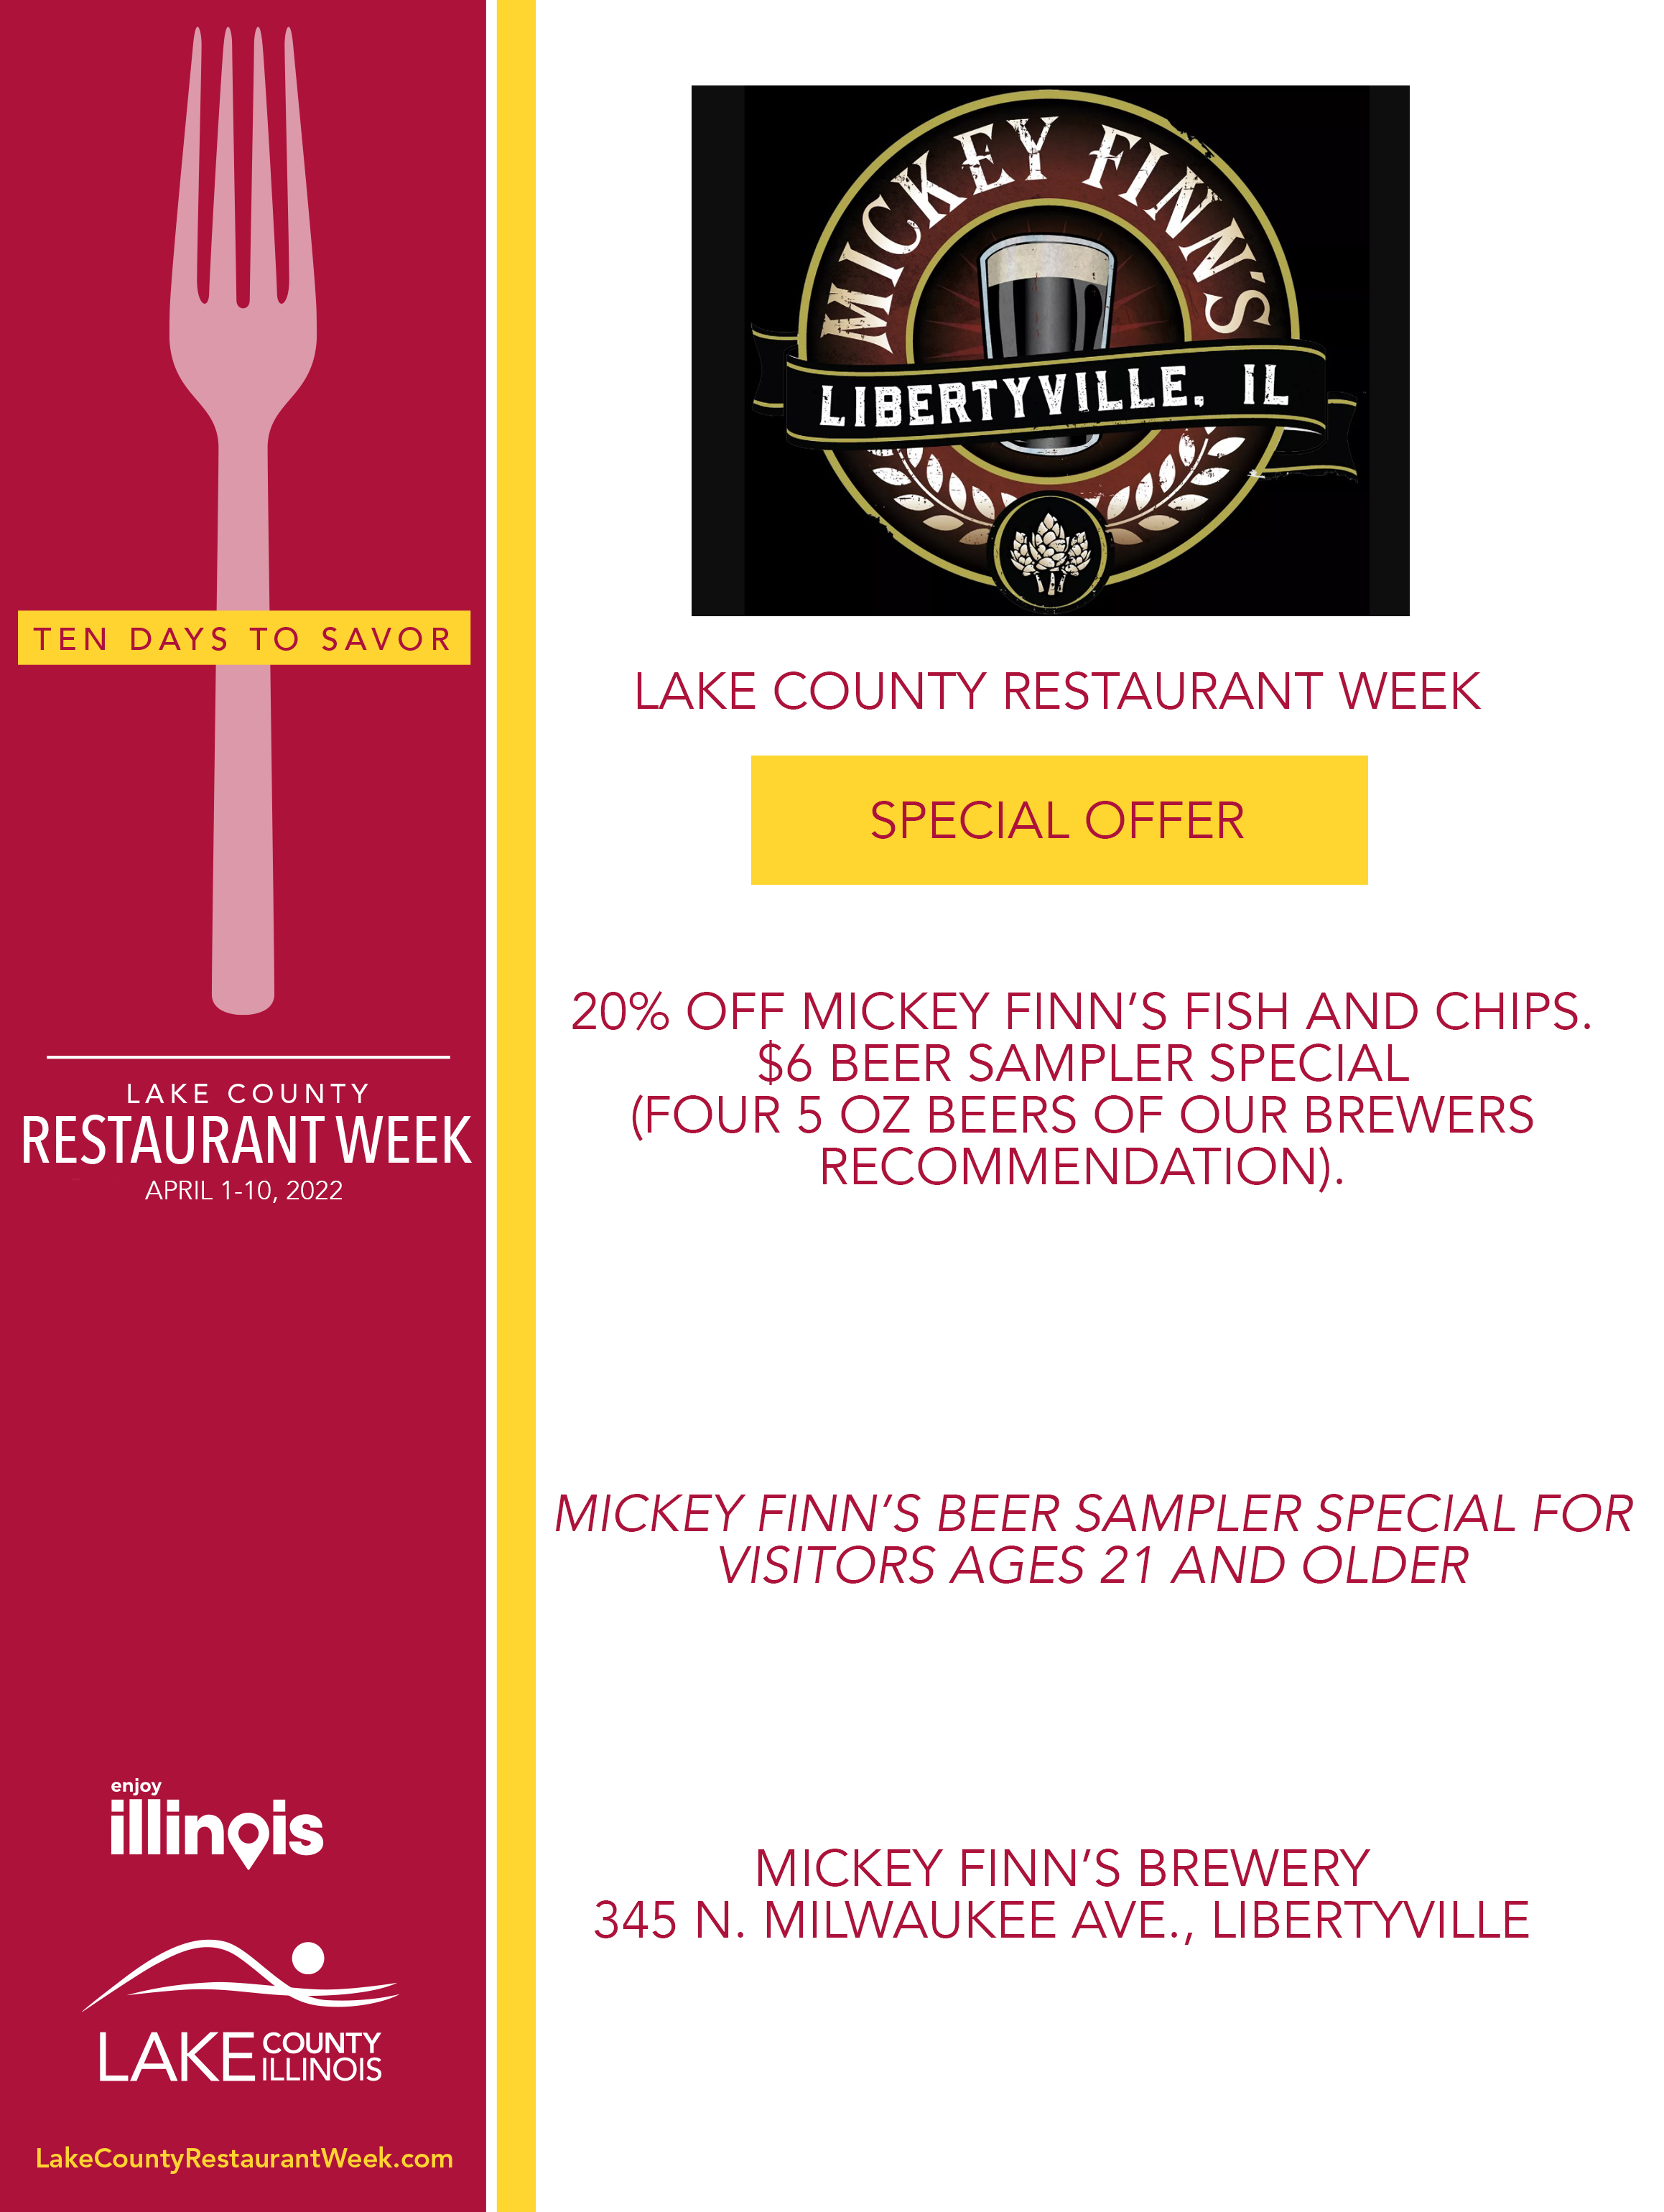 Mickey Finn's in Libertyville's LCRW Menu